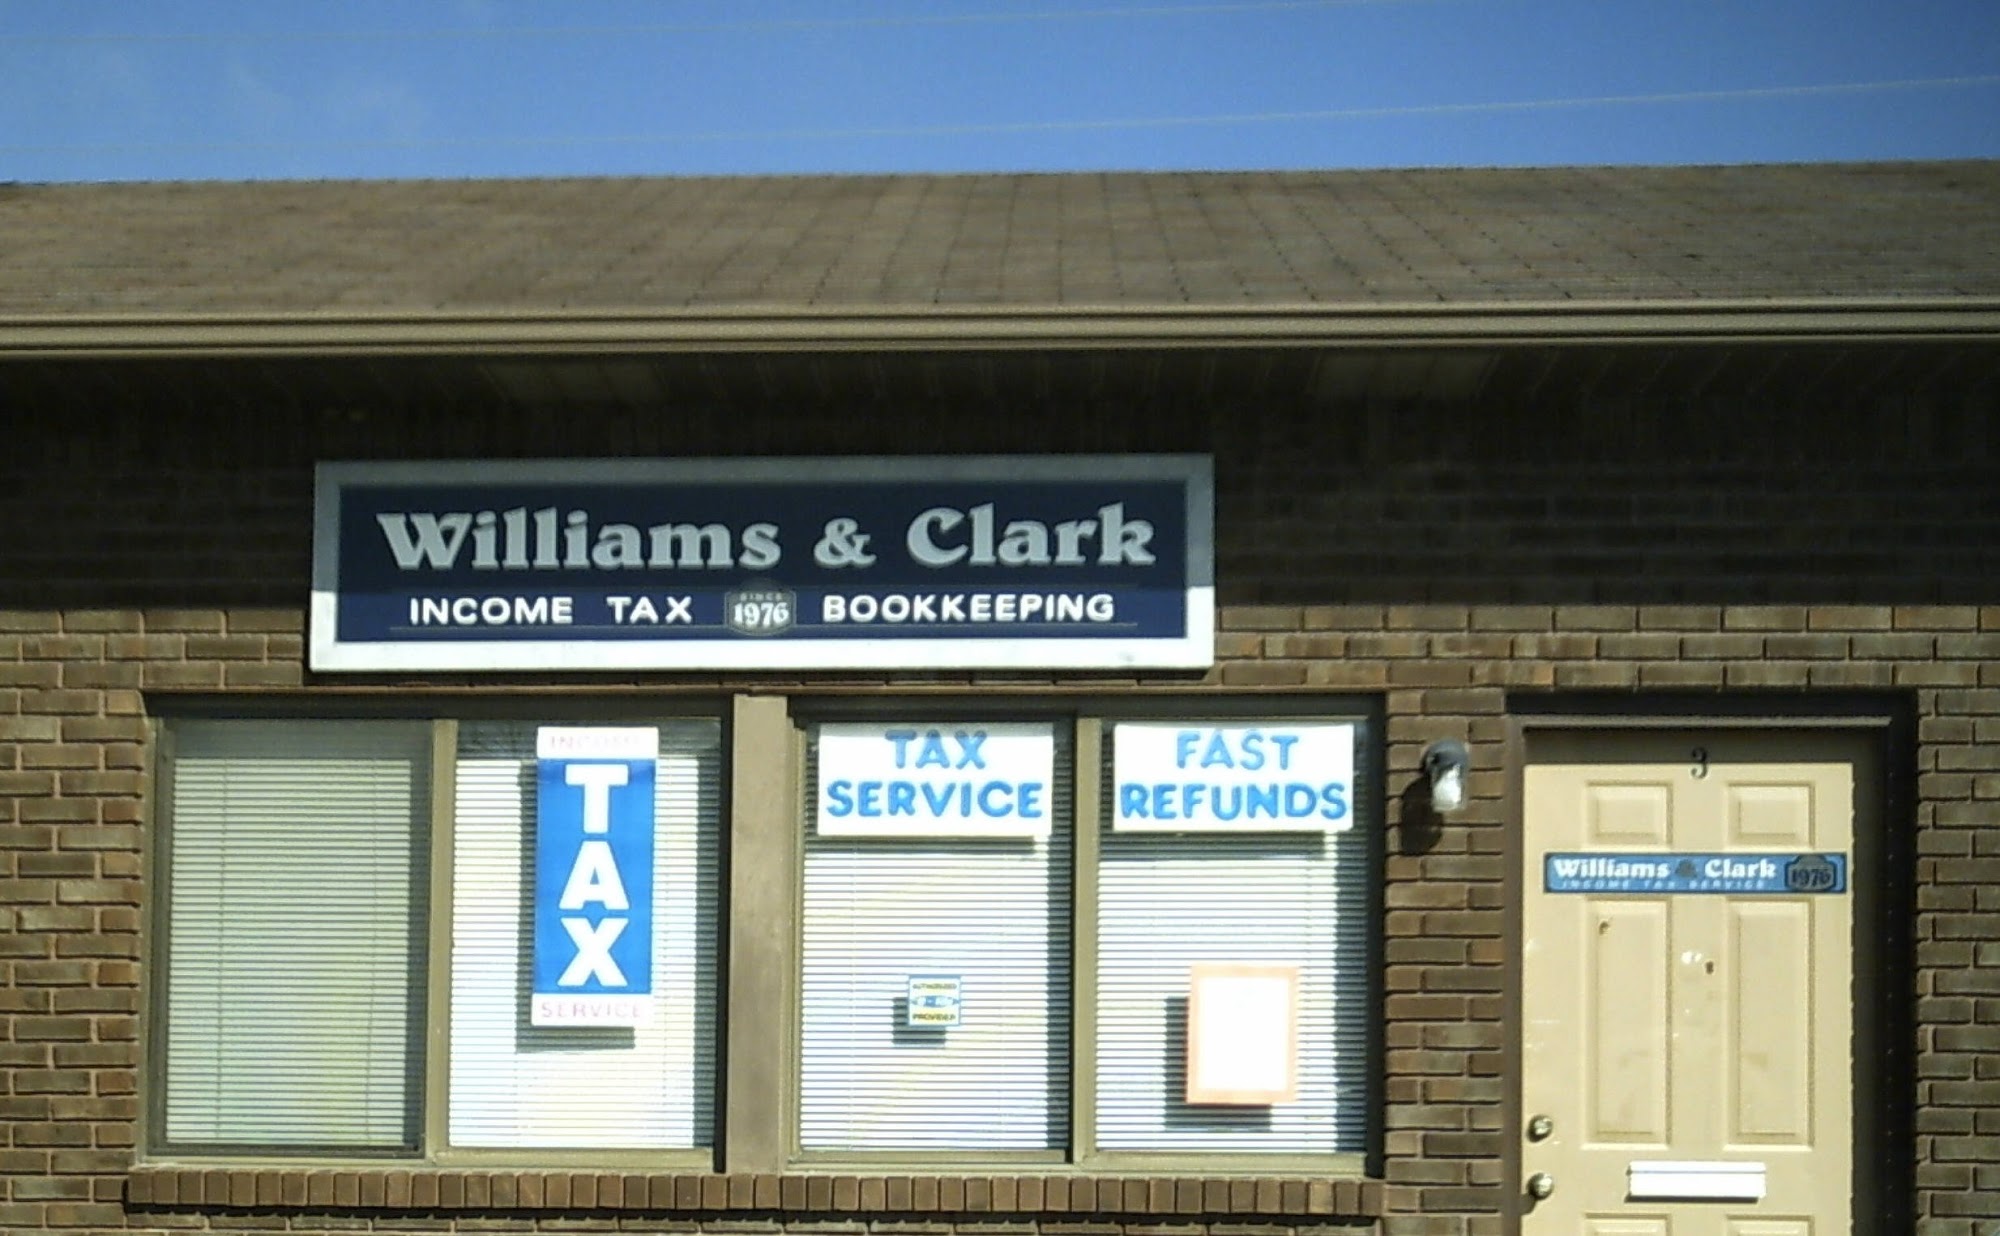 Williams & Clark Bookkeeping & Tax Service